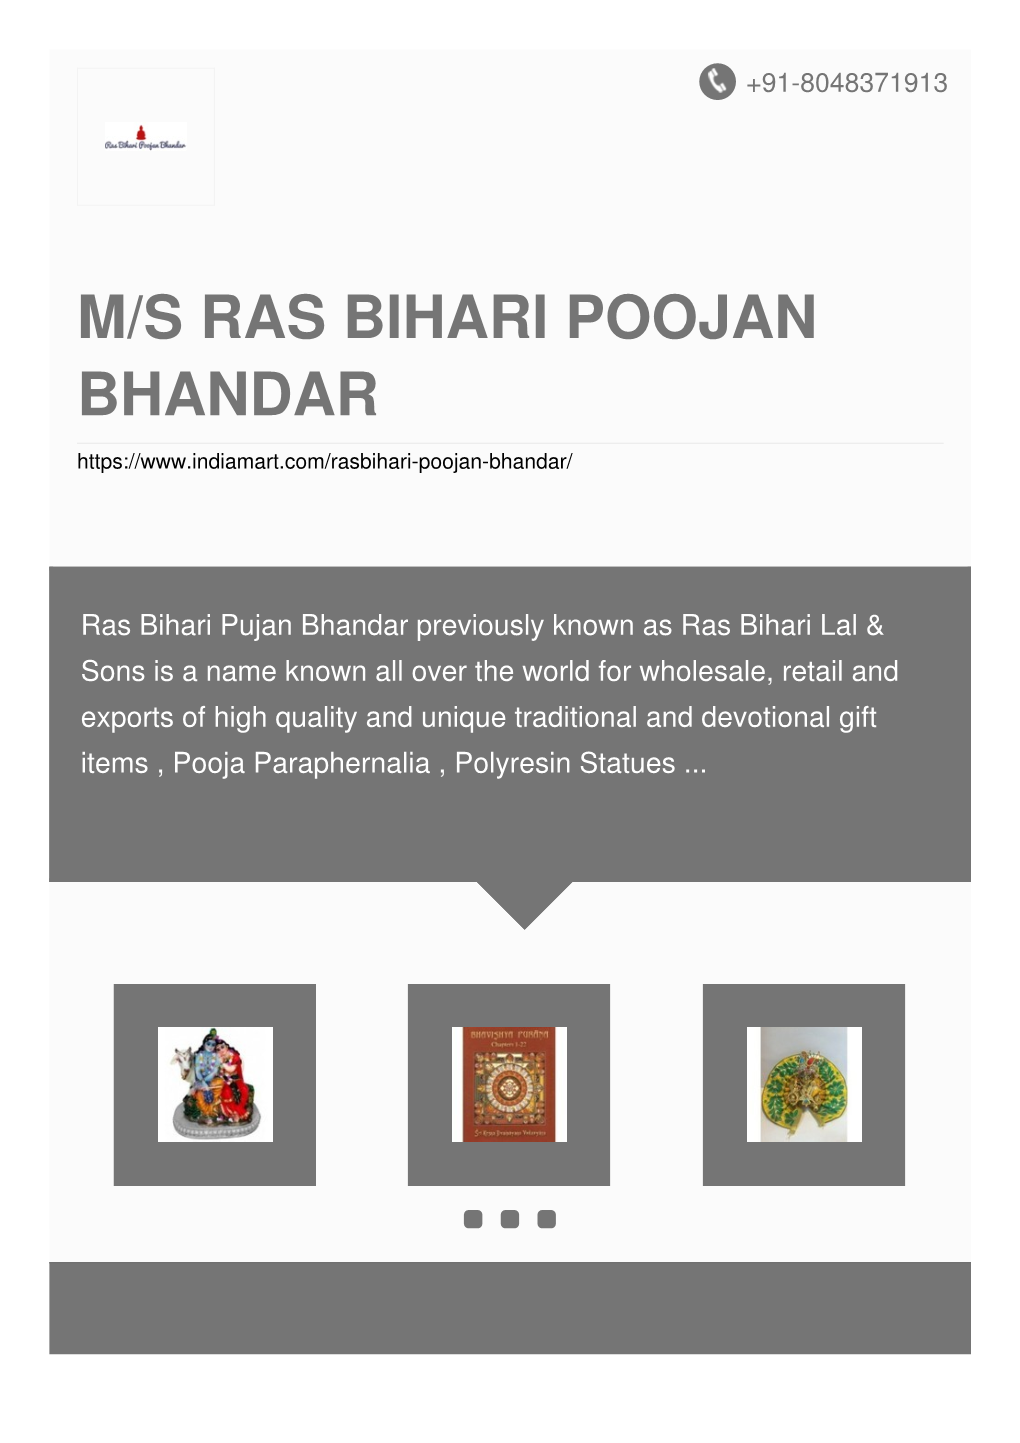 M/S Ras Bihari Poojan Bhandar